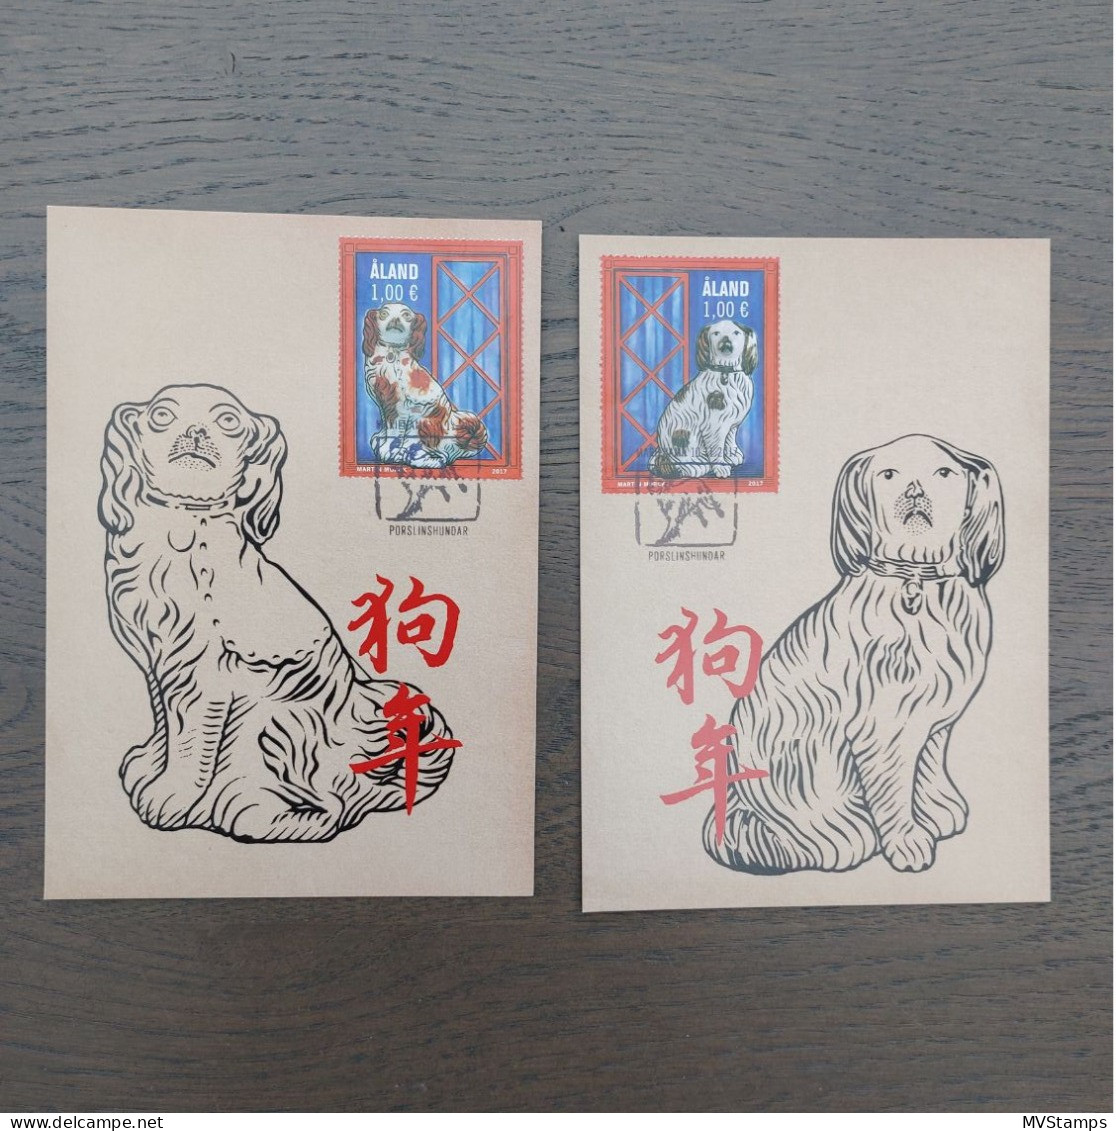 Aland 2017 Set Dogs/Hunde (Michel 448/49) Used On Illustrated Postcards - Aland